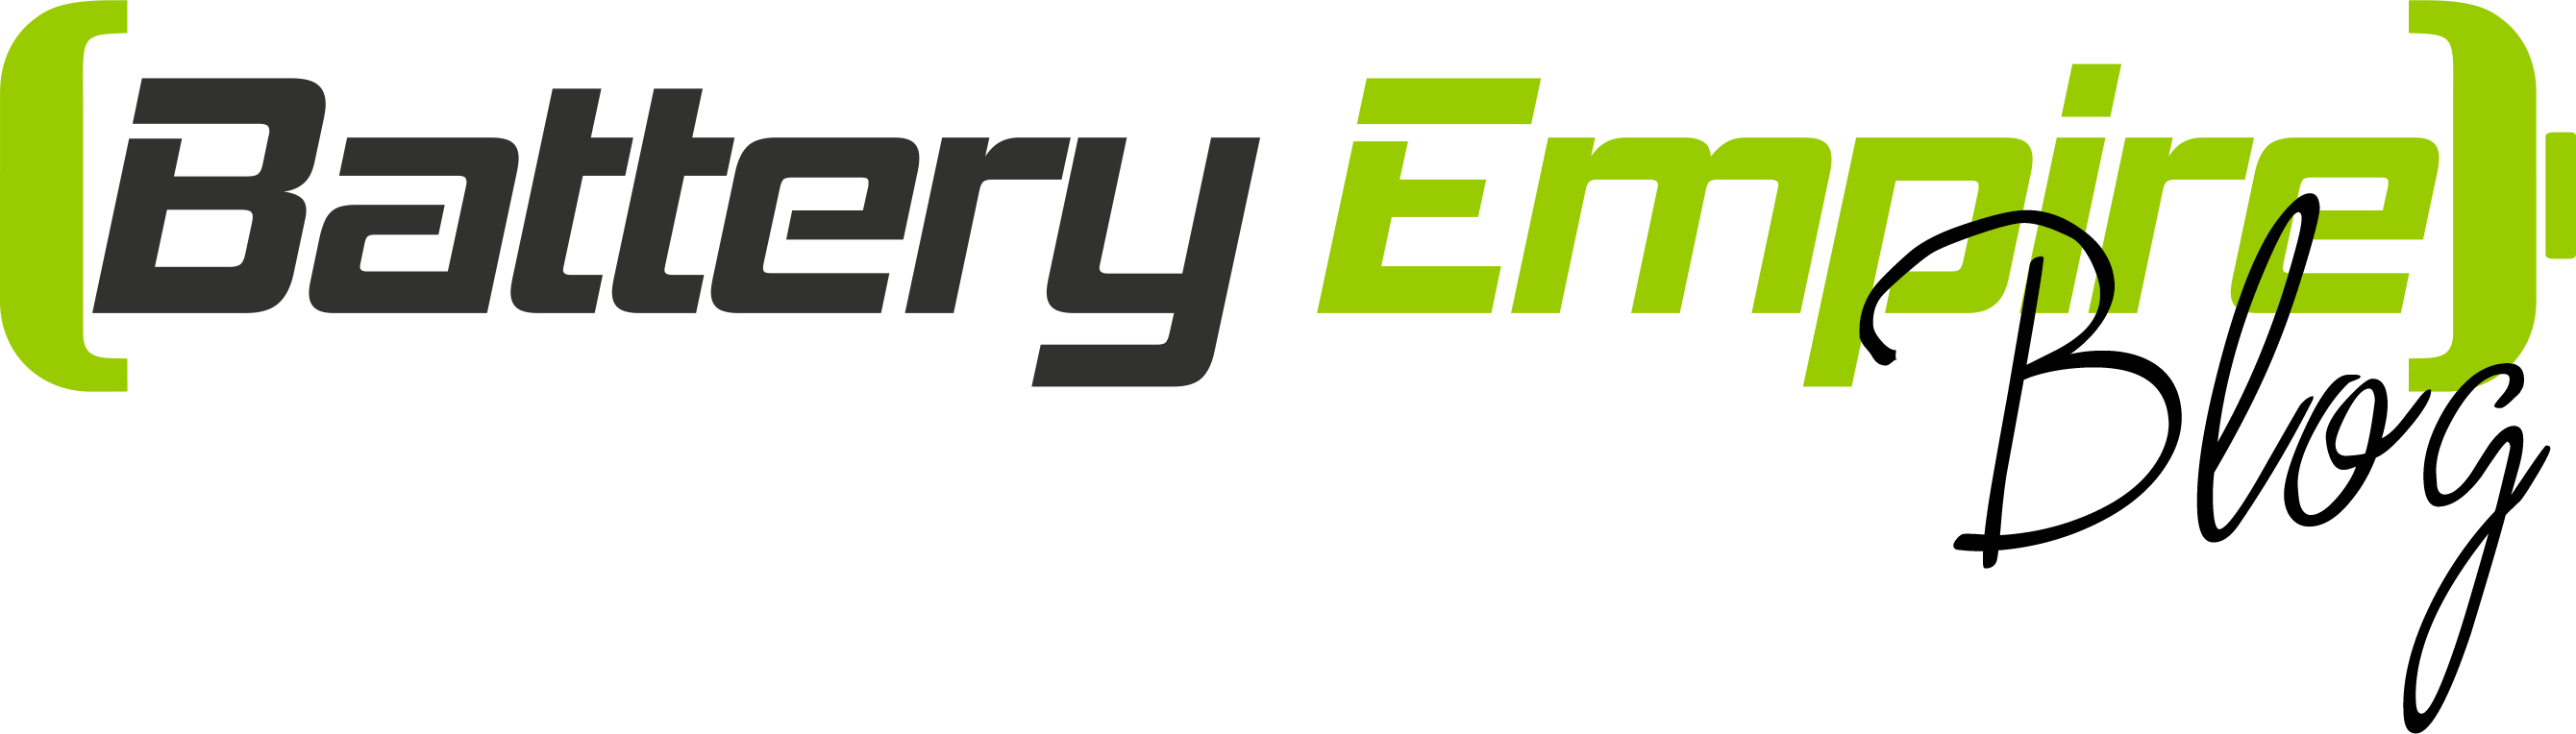 Empire Battery Logo - Battery Empire Blog